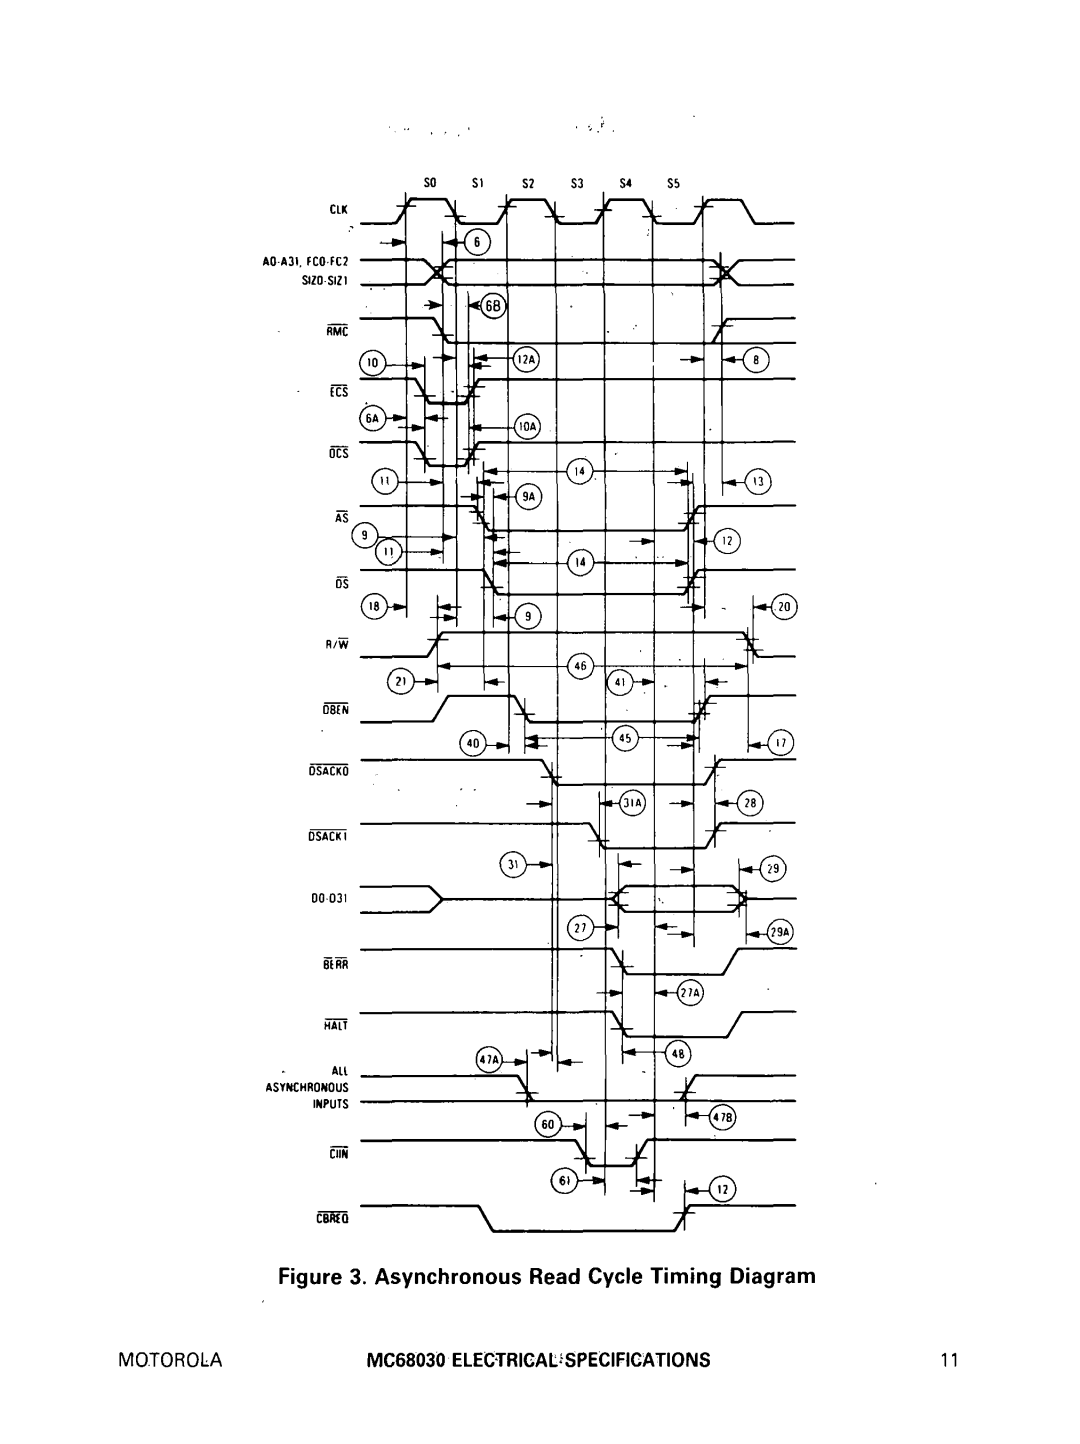 Motorola Asynchronous Read Cycle Timing Diagram, MOTOROLAMC68030 ELECTRICAE~SPECIFICATIONS11, ~-.~, oc-g- - ~, ~ ~ 